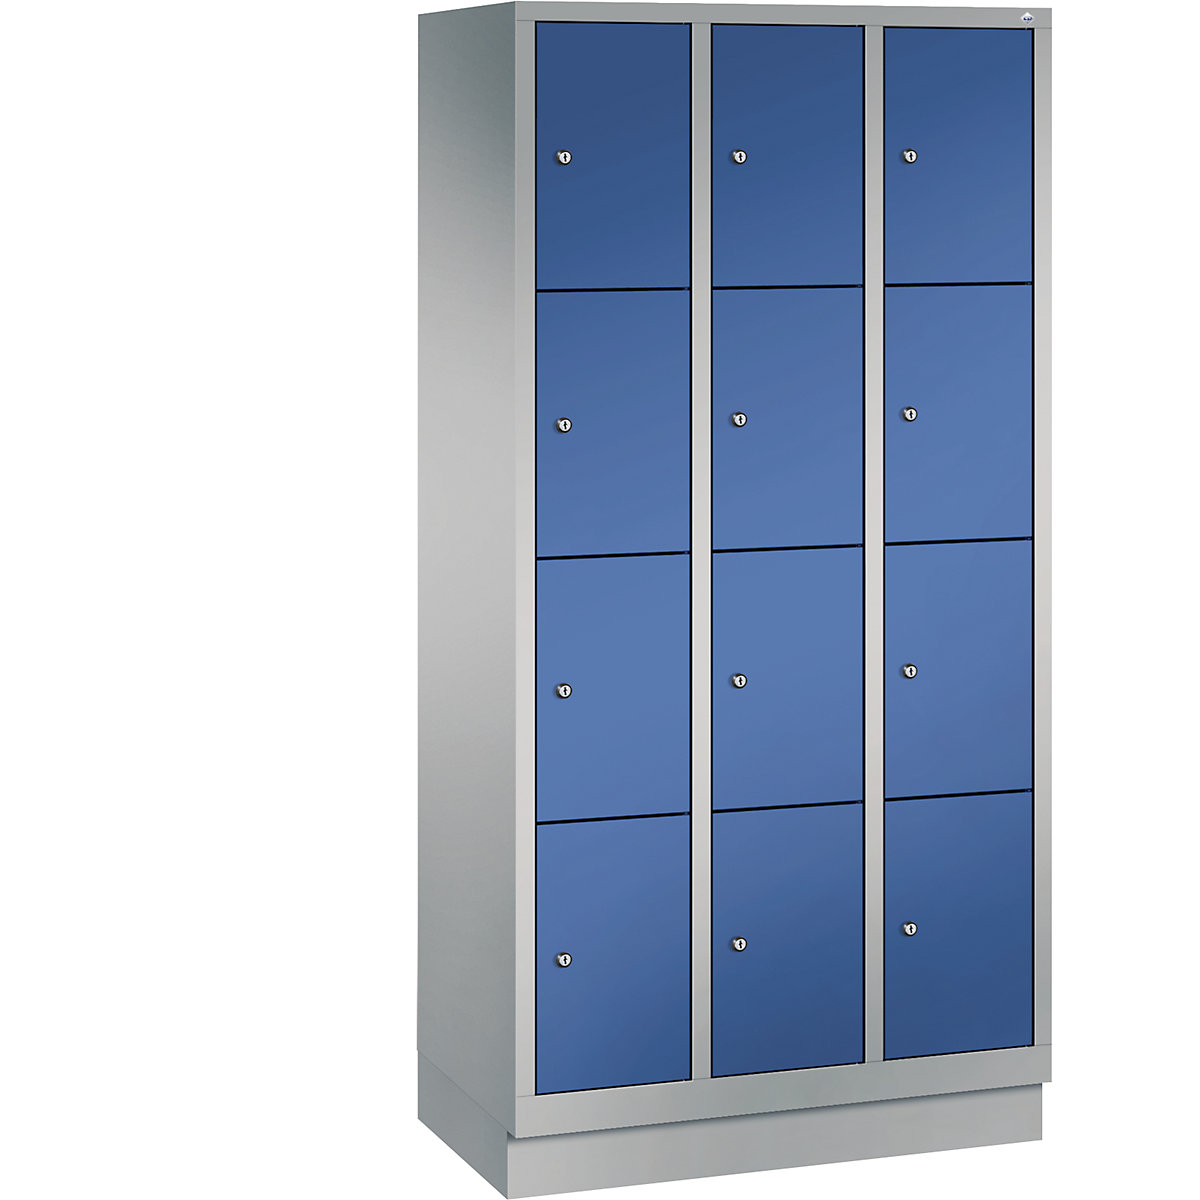 CLASSIC locker unit with plinth – C+P, 3 compartments, 4 shelf compartments each, compartment width 300 mm, white aluminium / gentian blue-7